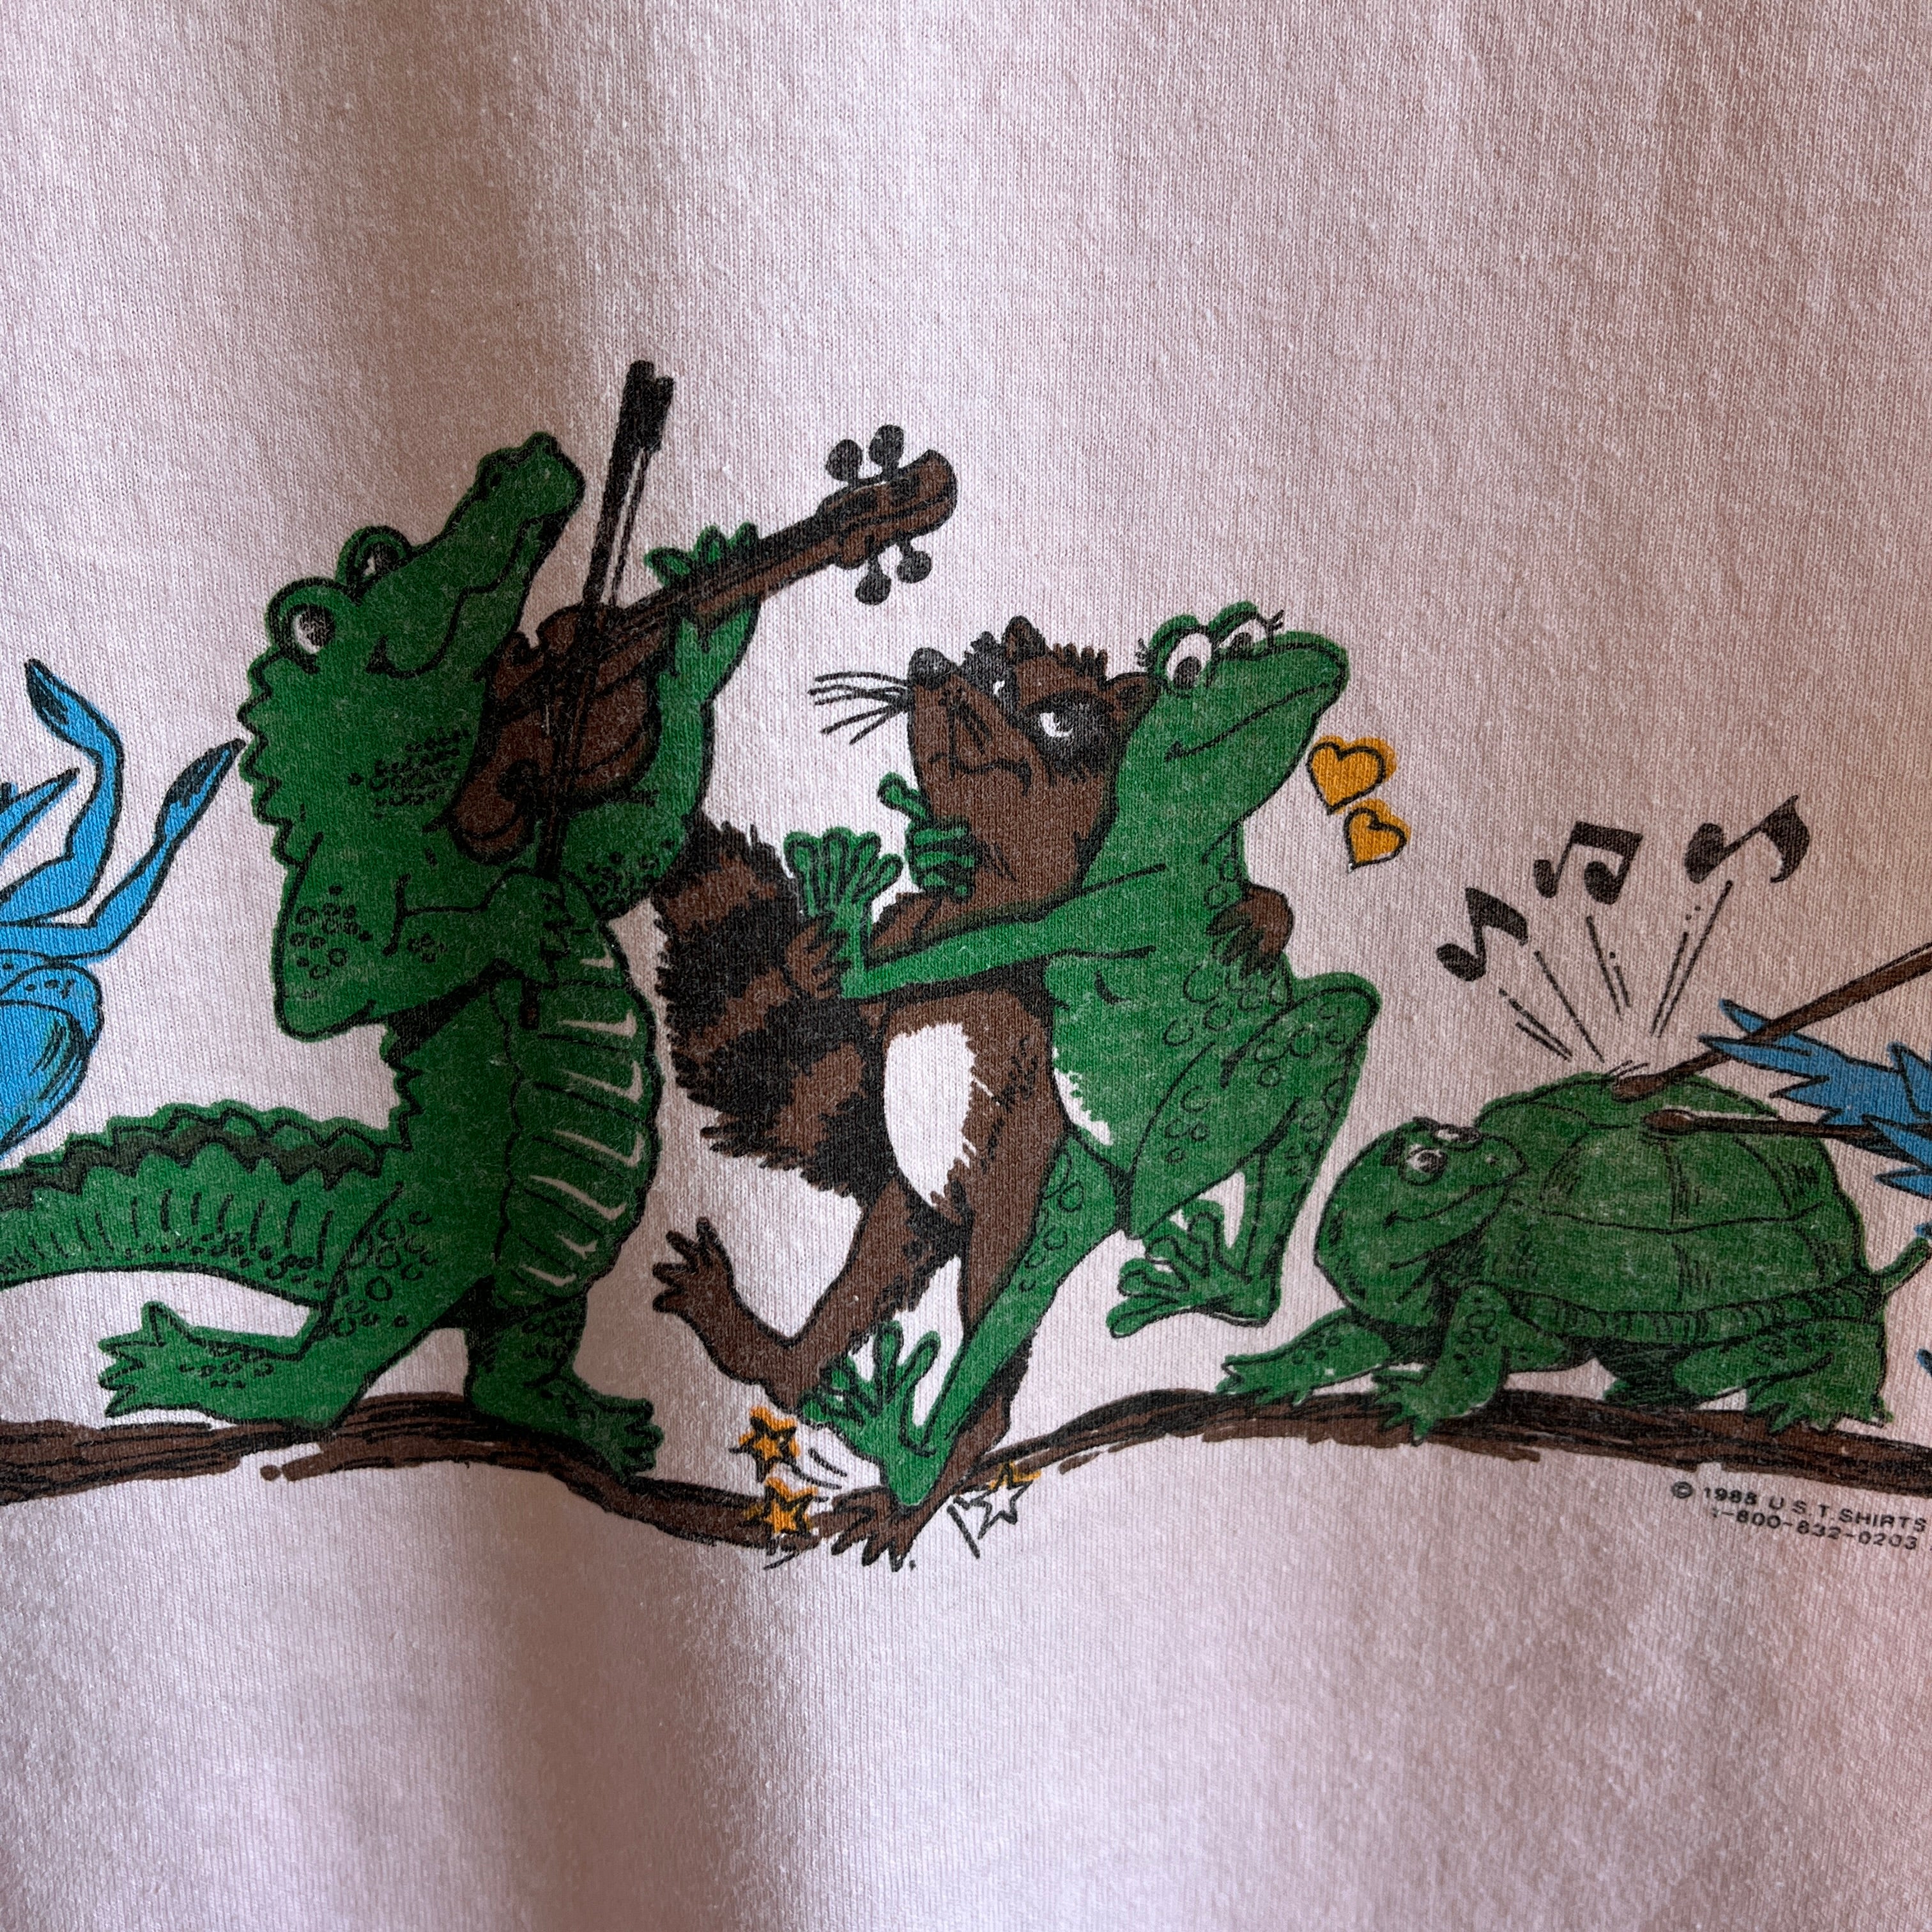 1988 Support Louisiana Wildlife - Throw a Party - Wrap Around T-Shirt - SO GOOD!